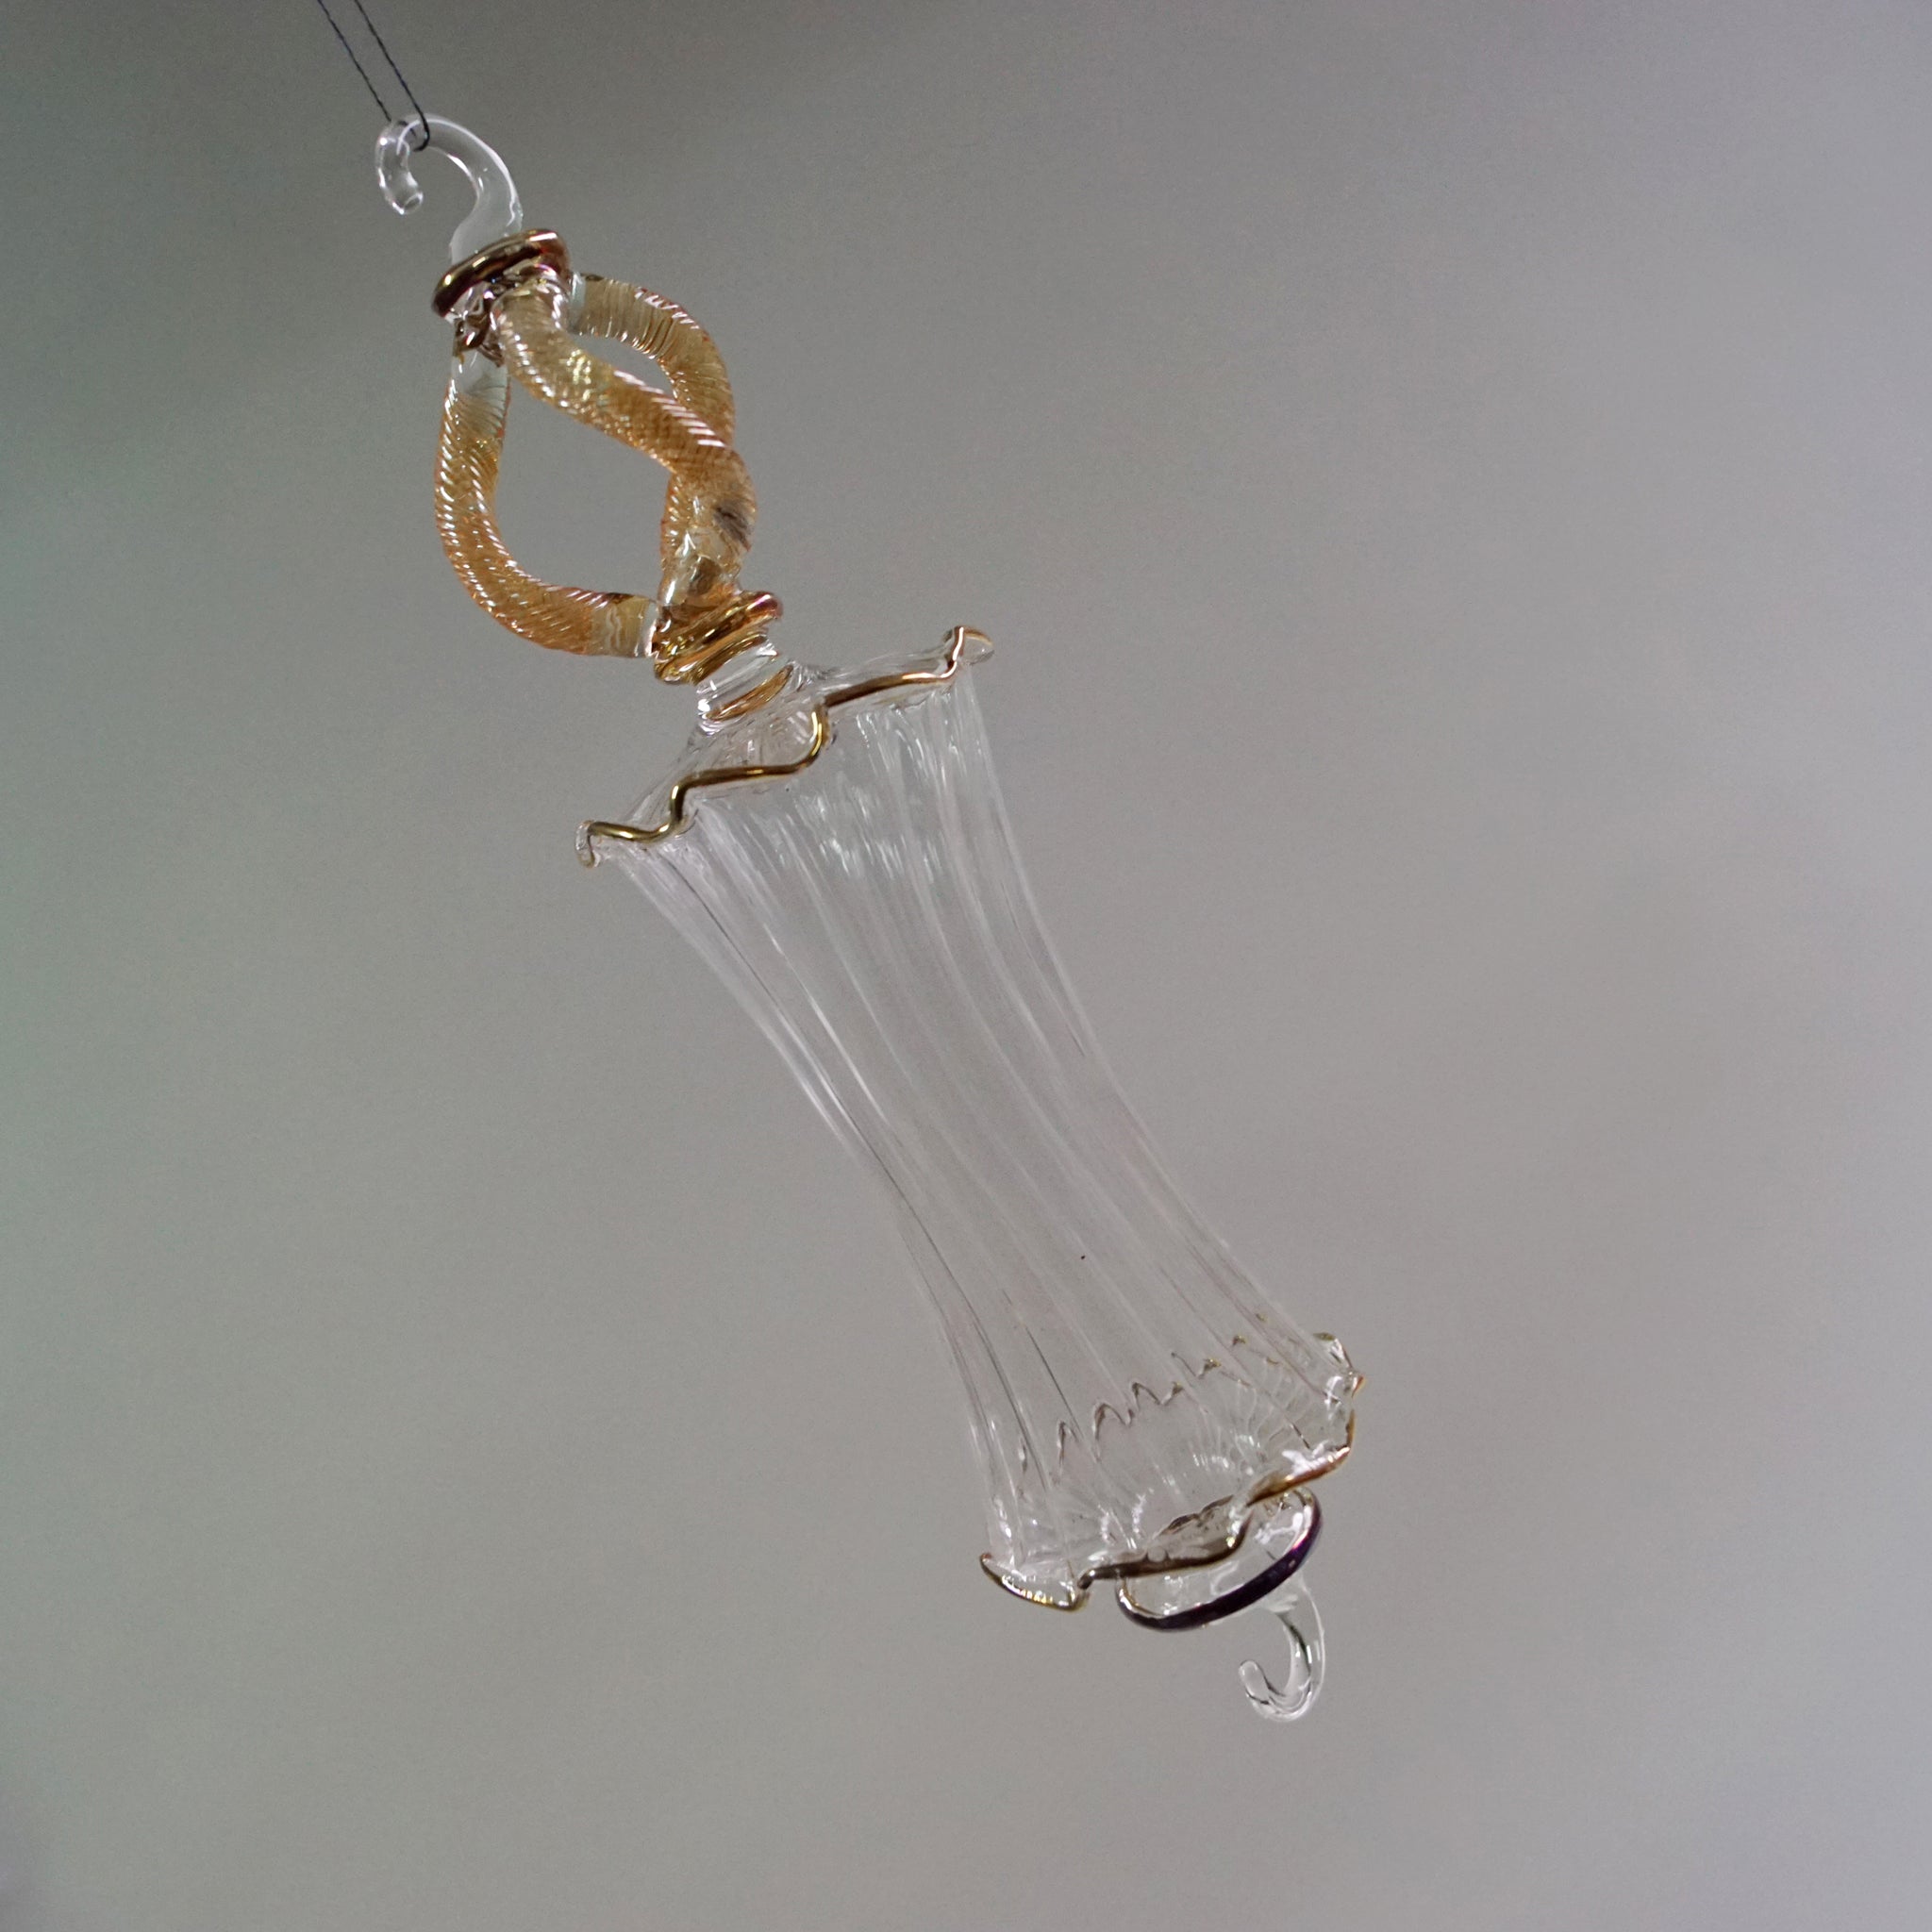 Goodwill-Kersthanger goud luster glas 15 cm - Schreuder-kraan.shop